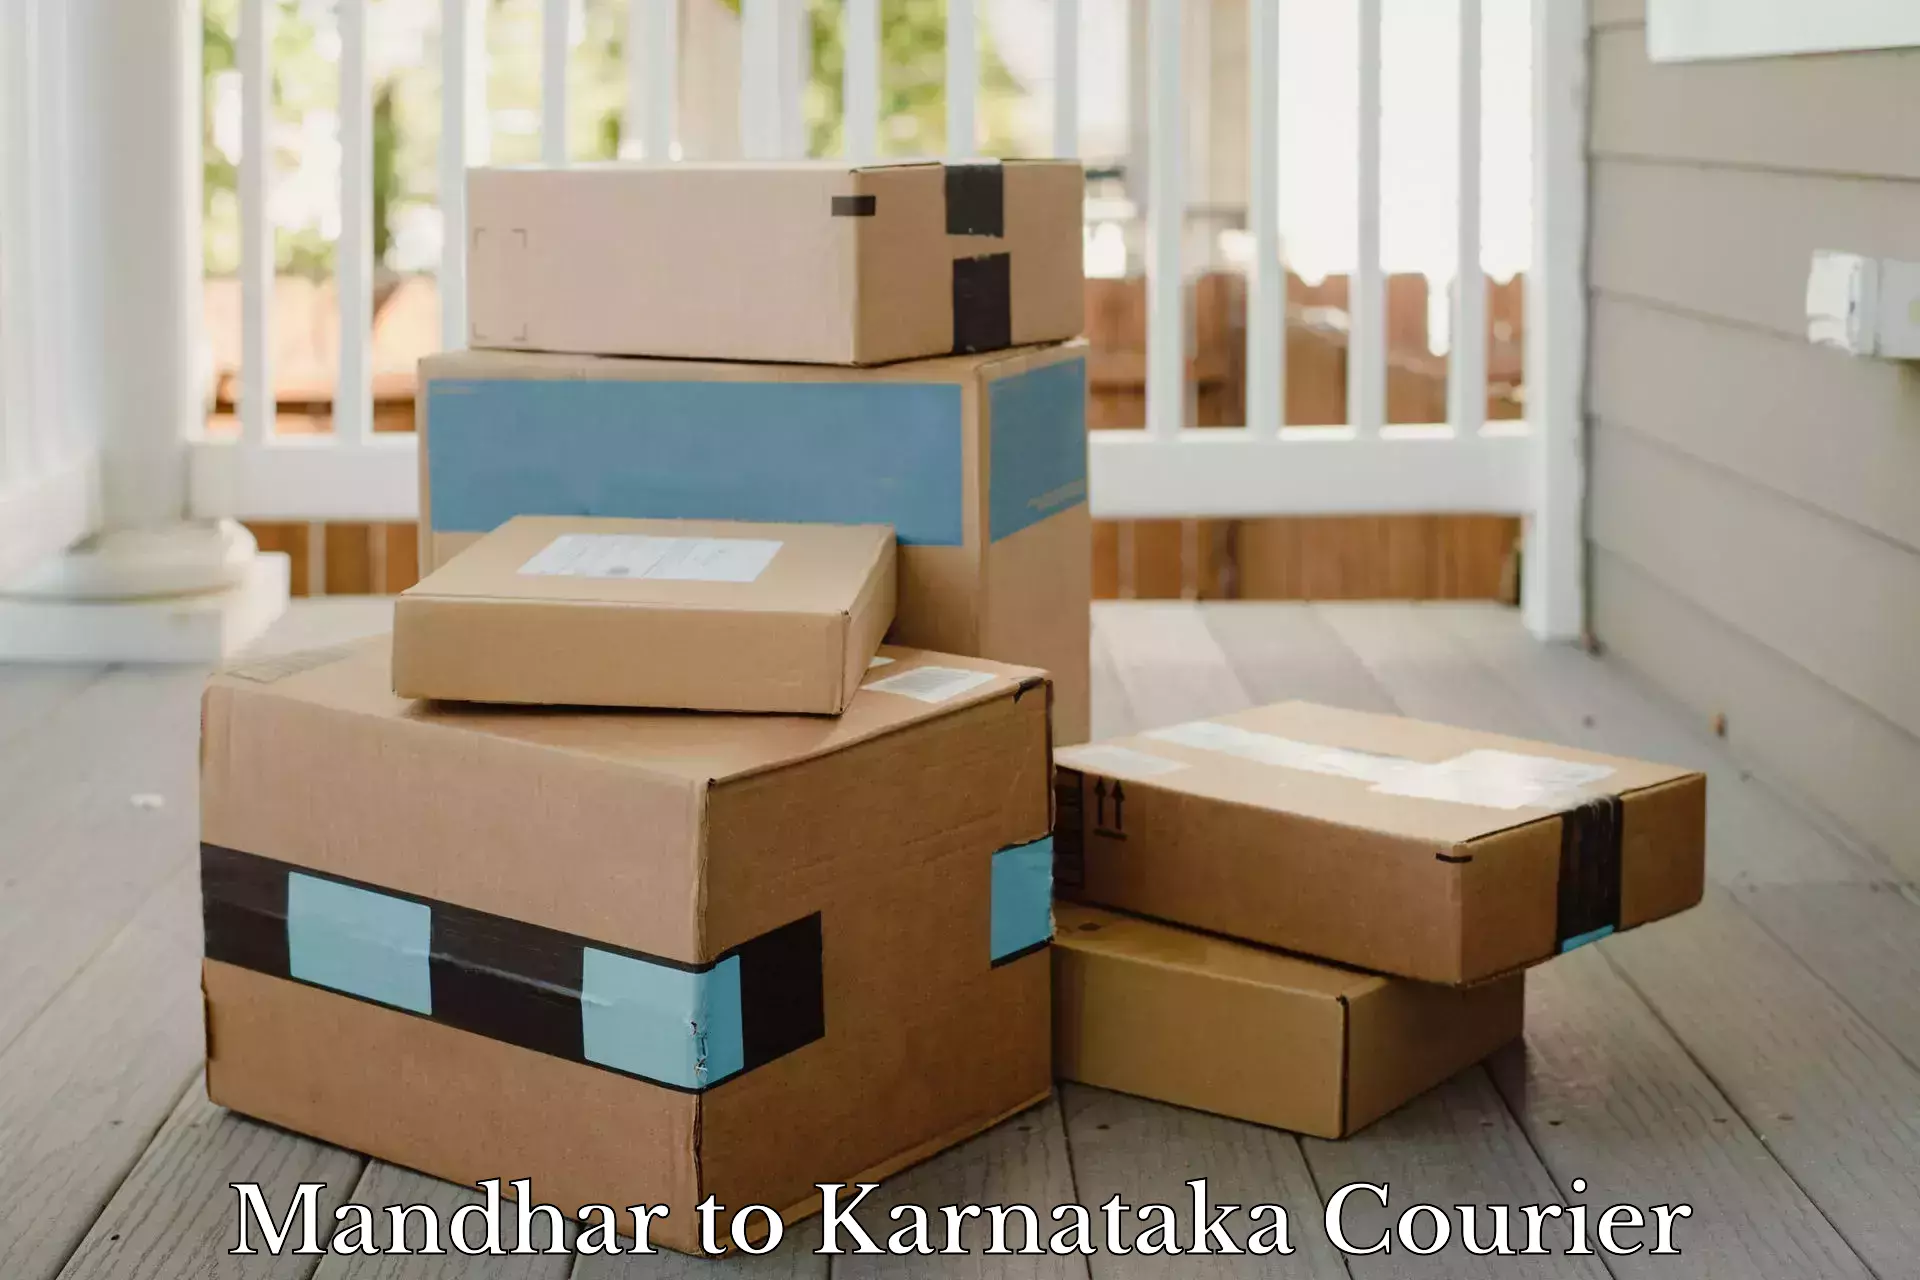 Cash on delivery service Mandhar to Kodagu